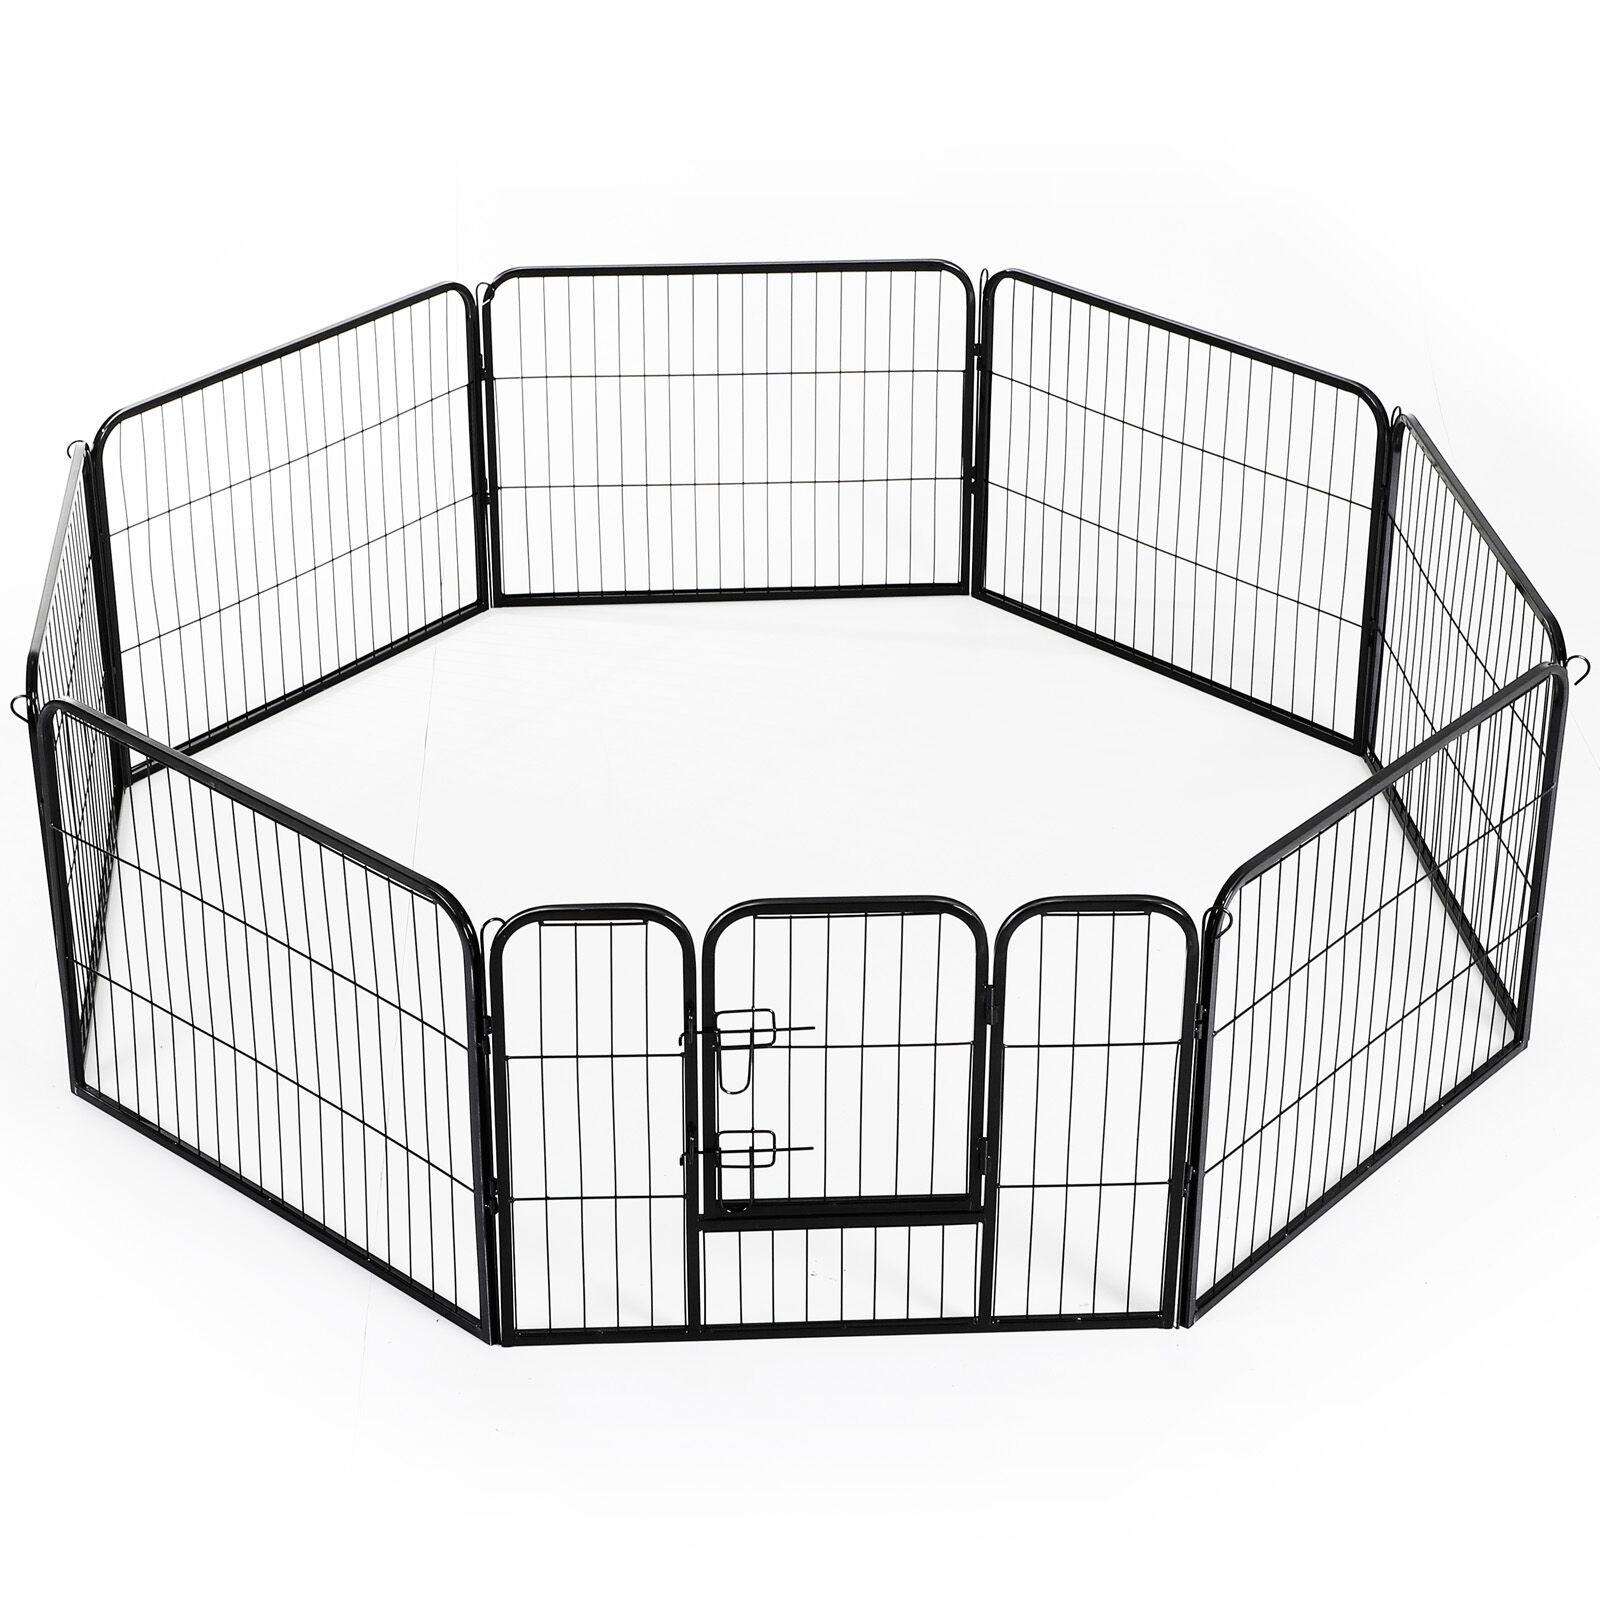 PawHut Metal Playpen for Dogs, Small Pet Enclosure, Rabbit Pig Hutch Run, Foldable, Black, 80 x 60 cm